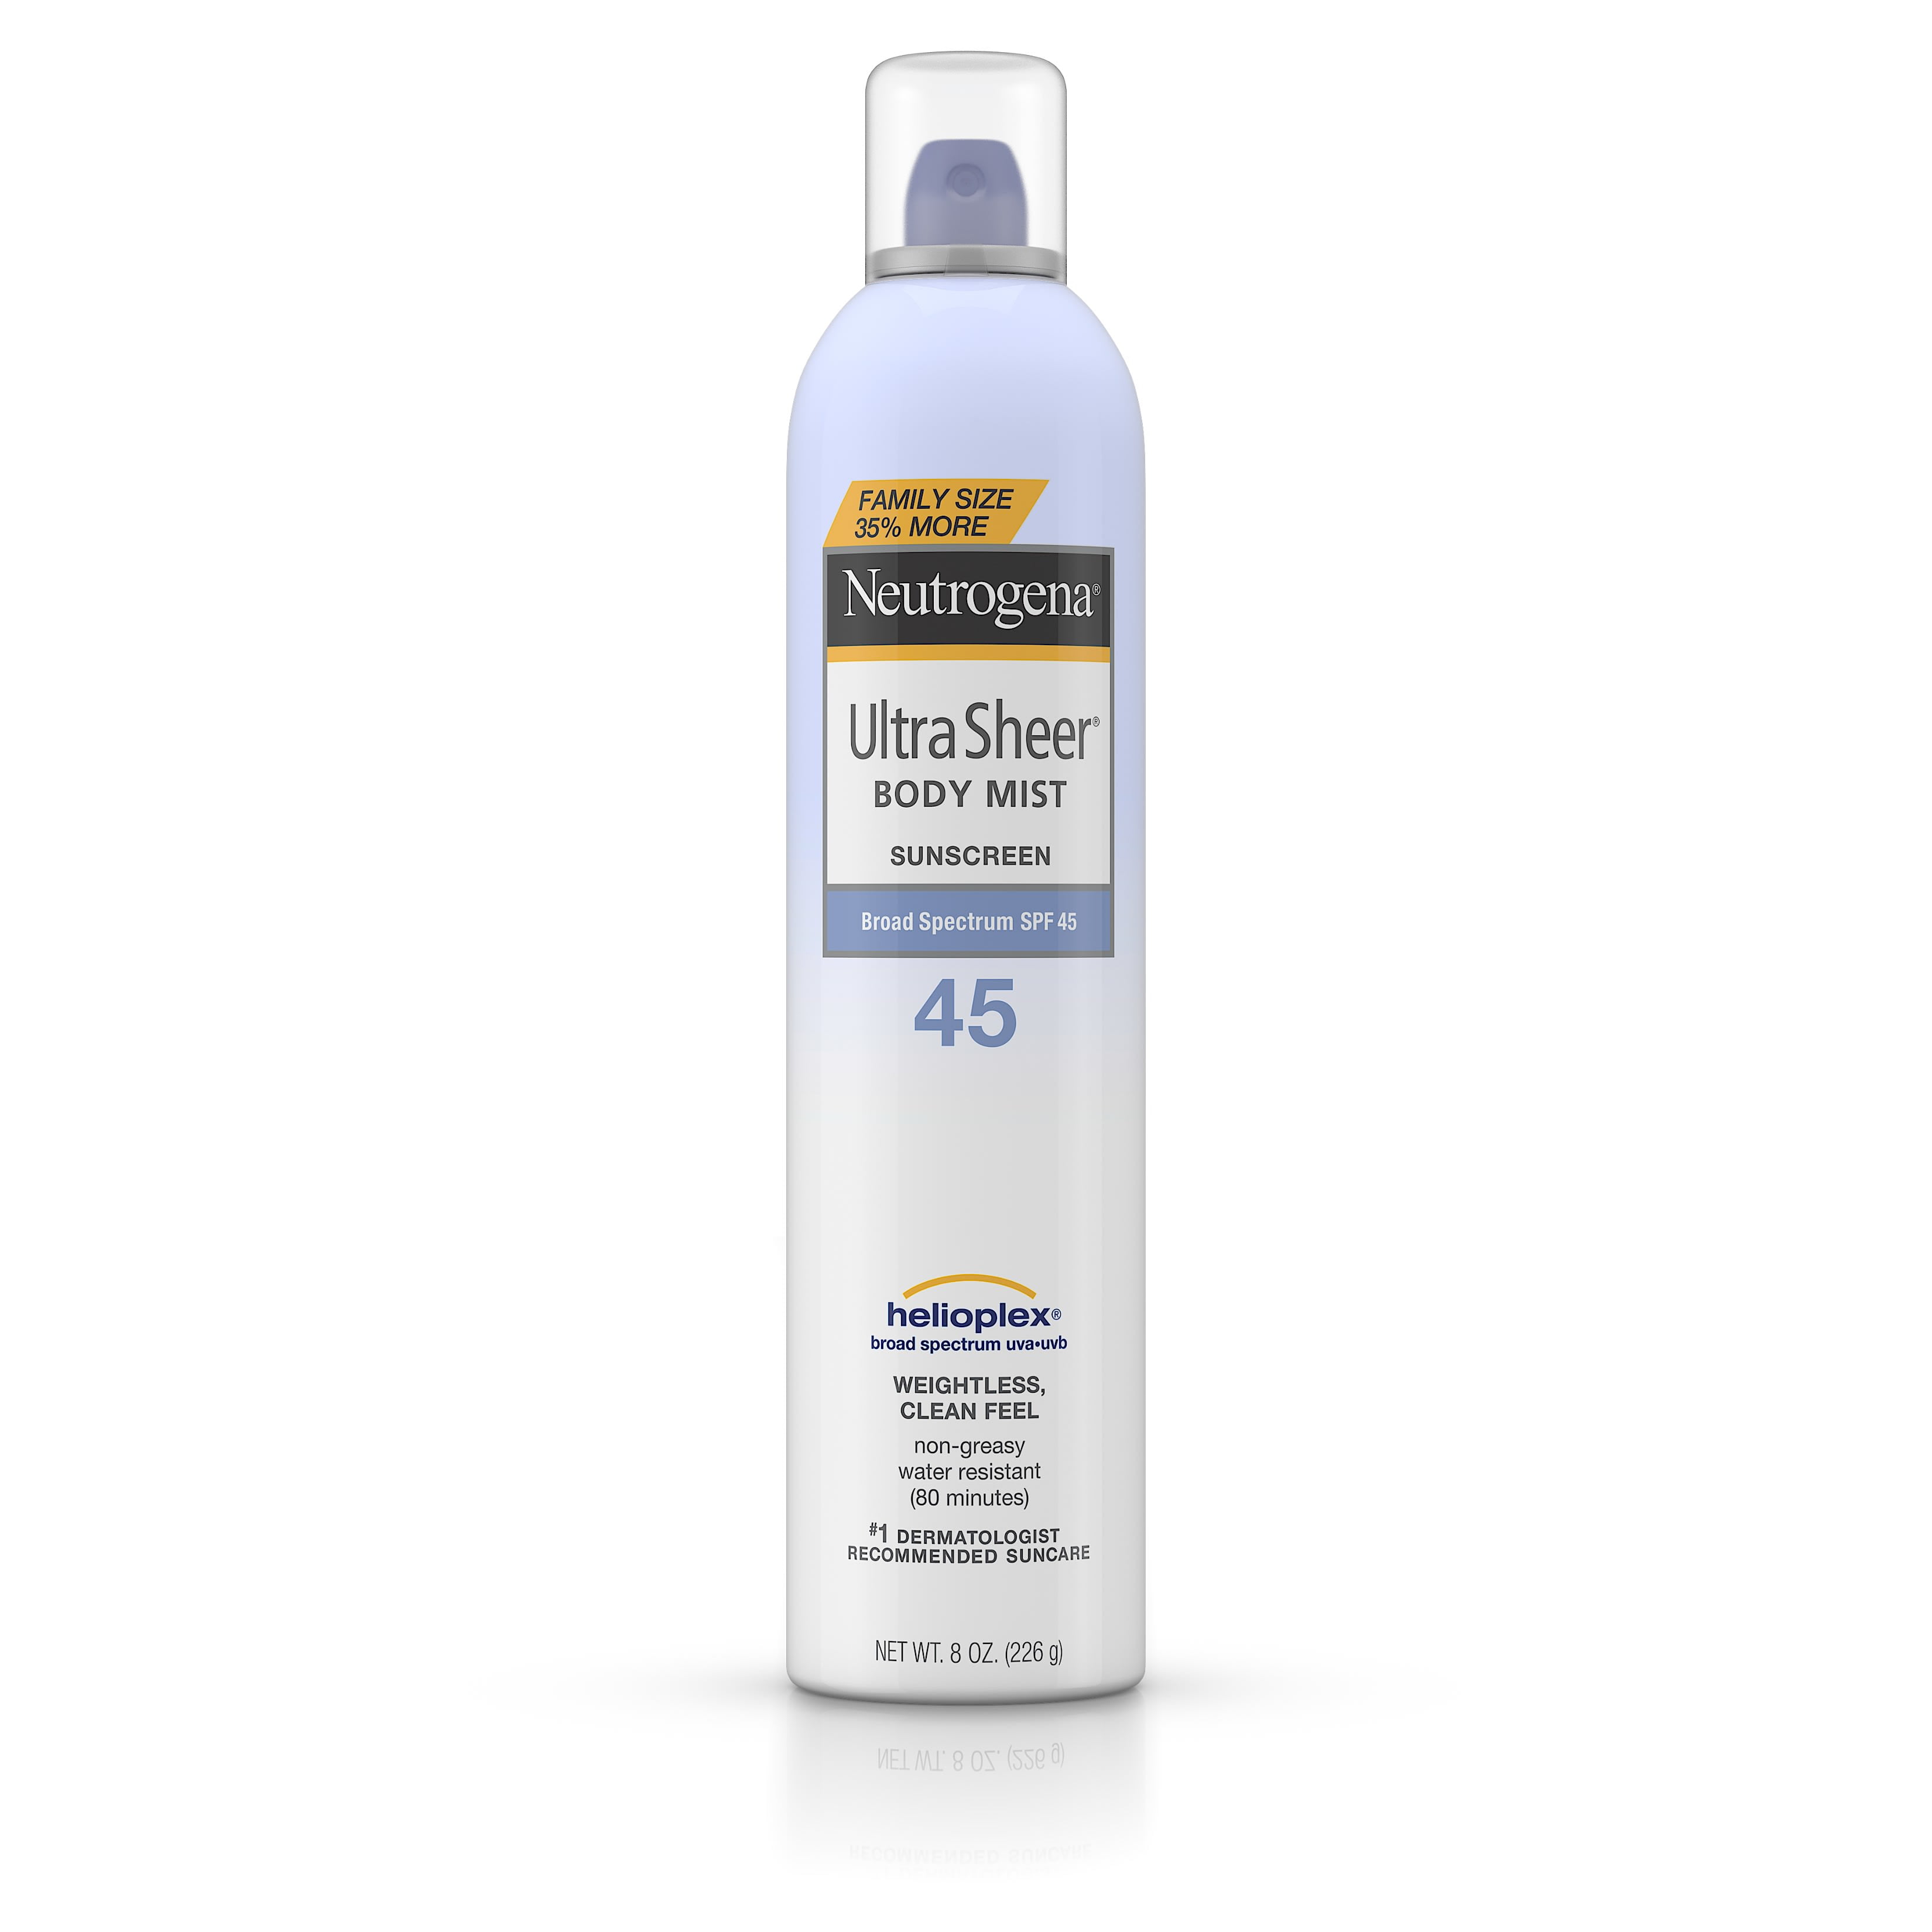 Neutrogena Ultra Sheer Sunscreen Spray SPF 45, Family Size, 8 oz